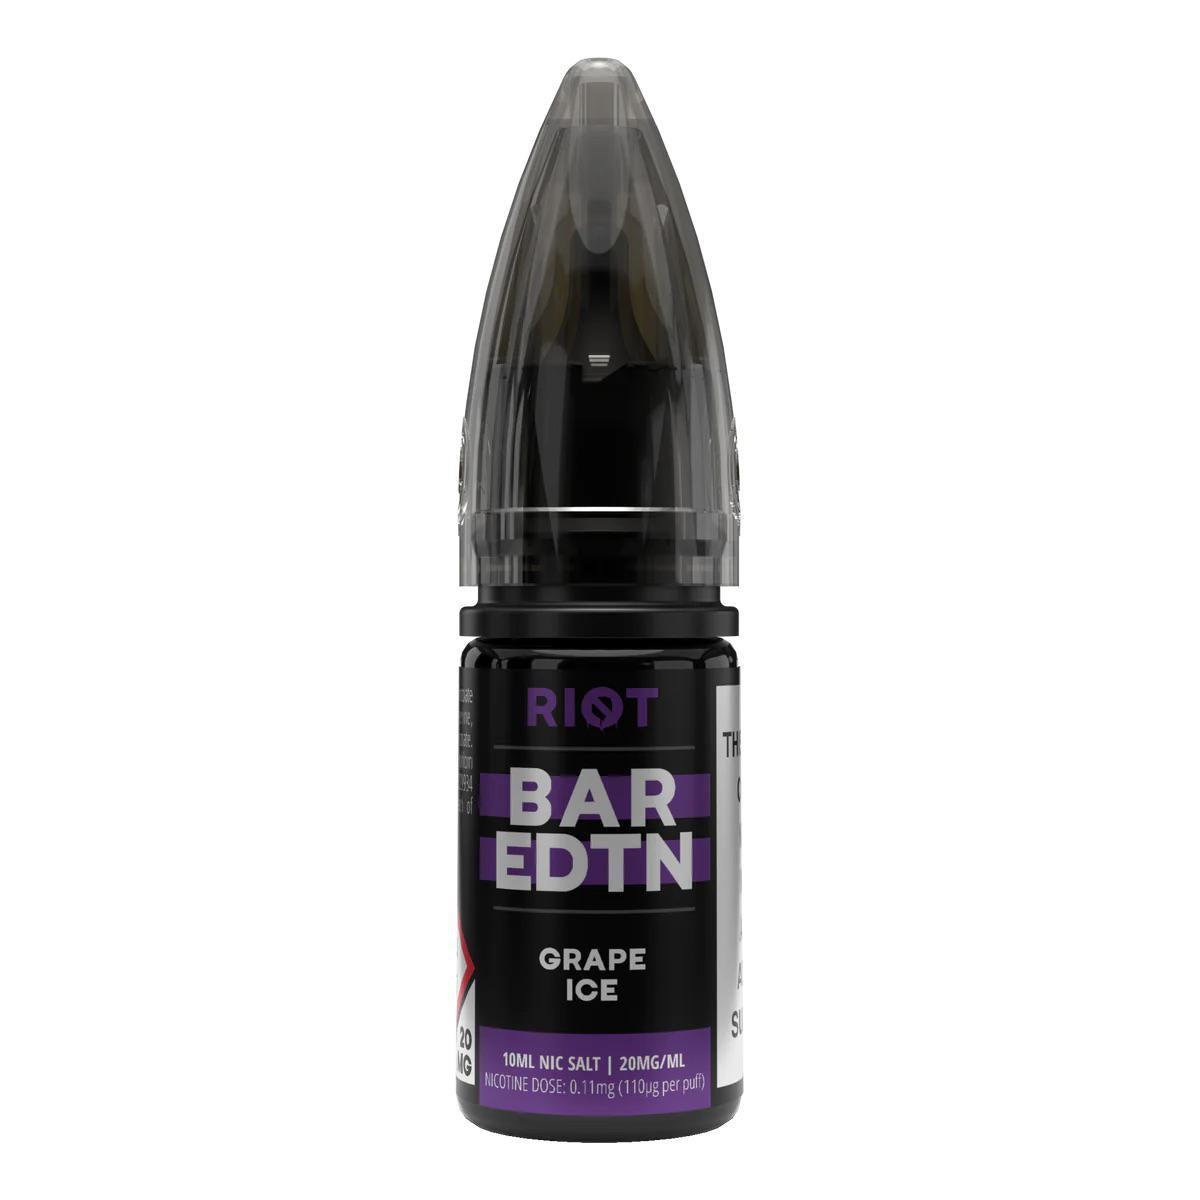 RIOT Bar EDTN - Grape Ice 10ml E-Liquid - The British Vape Company